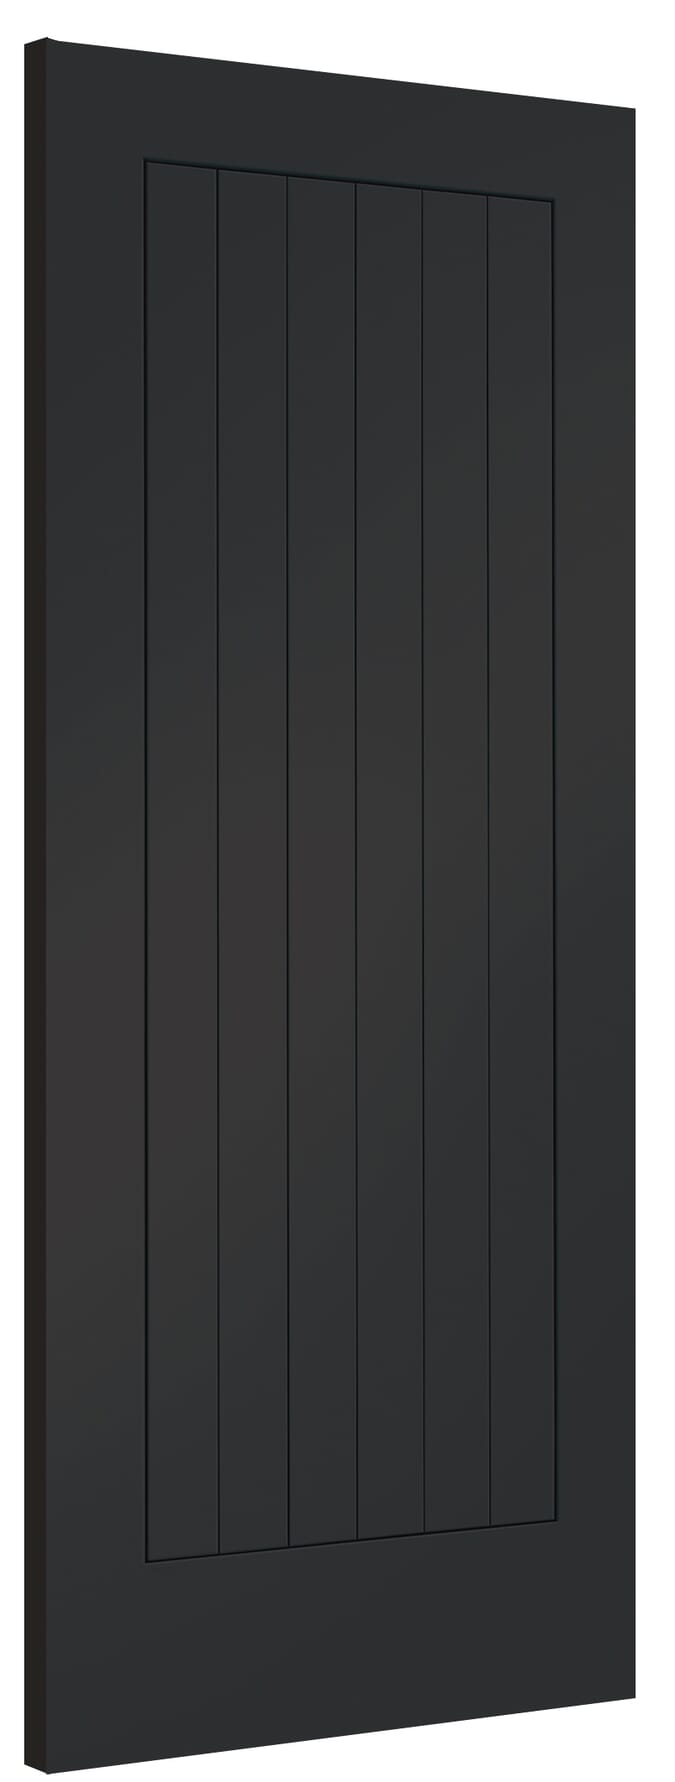 926x2040x40mm Suffolk Cosmos Black Internal Doors